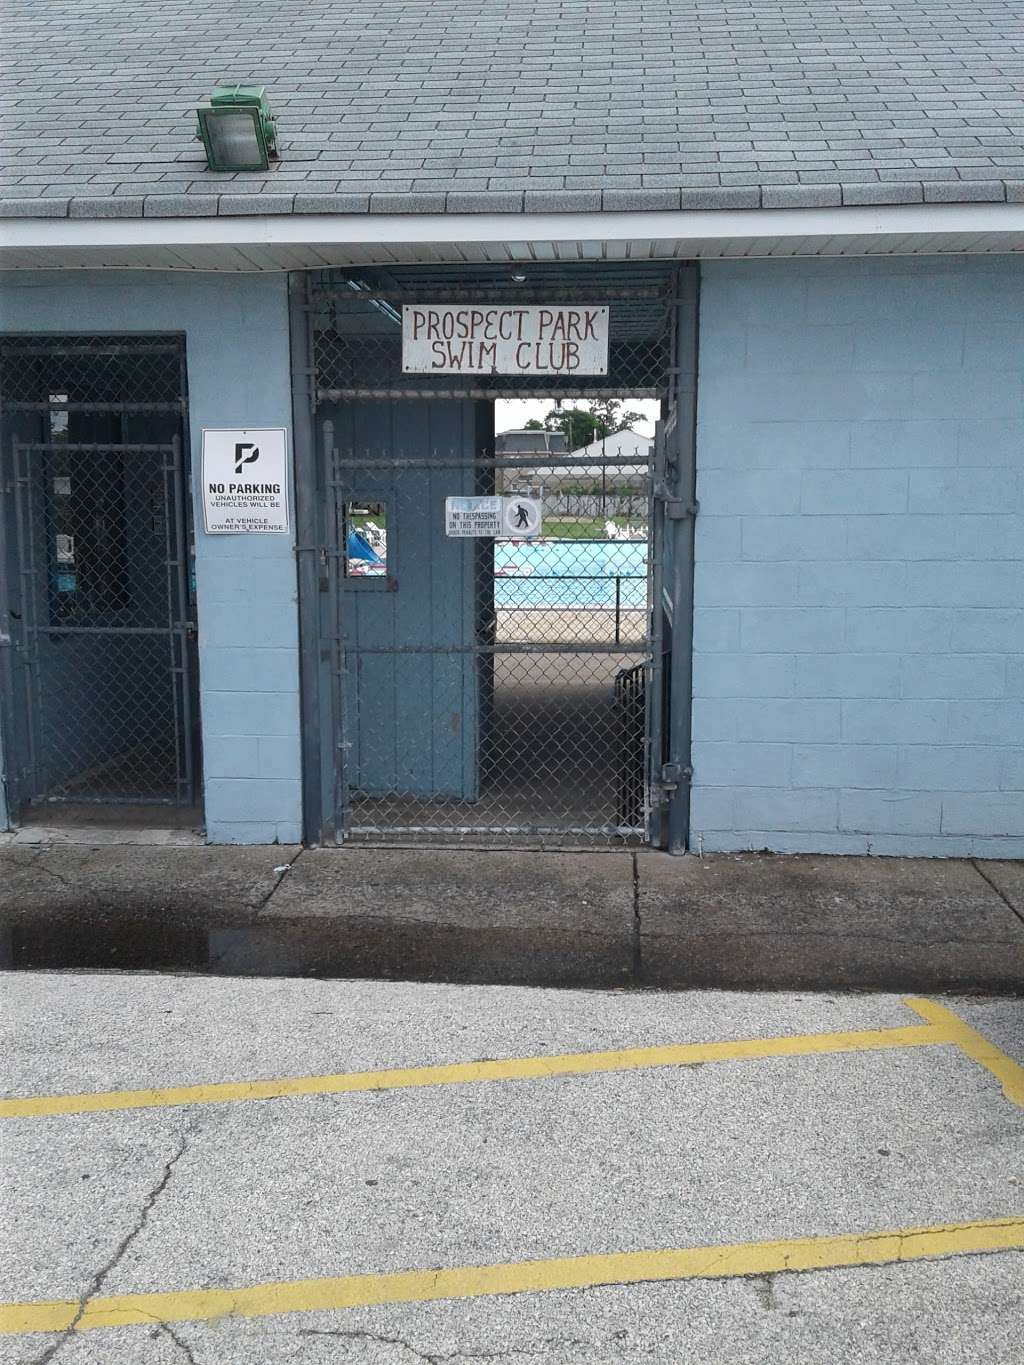 Prospect Park Swim Club - school  | Photo 2 of 2 | Address: 13 Washington Ave, Prospect Park, PA 19076, USA | Phone: (610) 586-5911